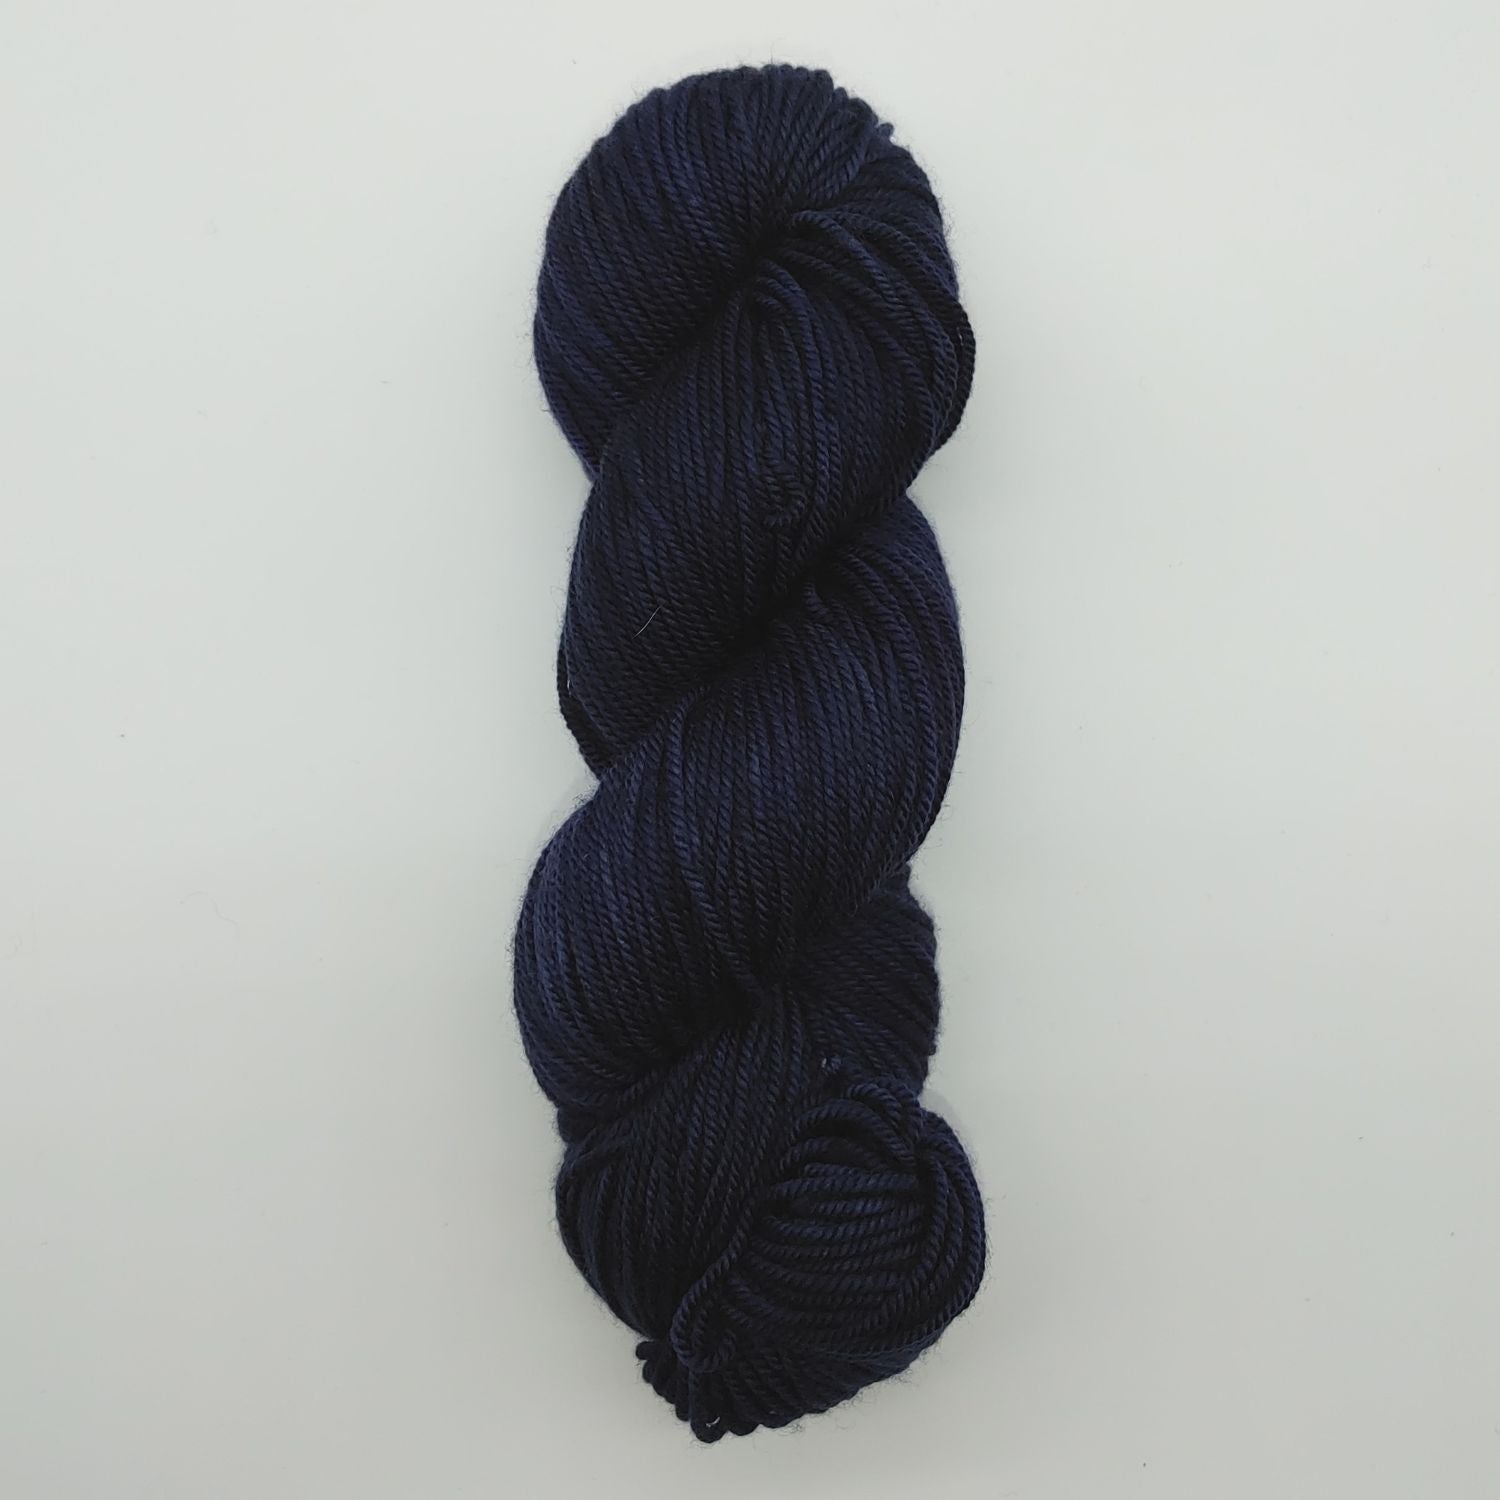 Yarn made from Alpaca Fibre